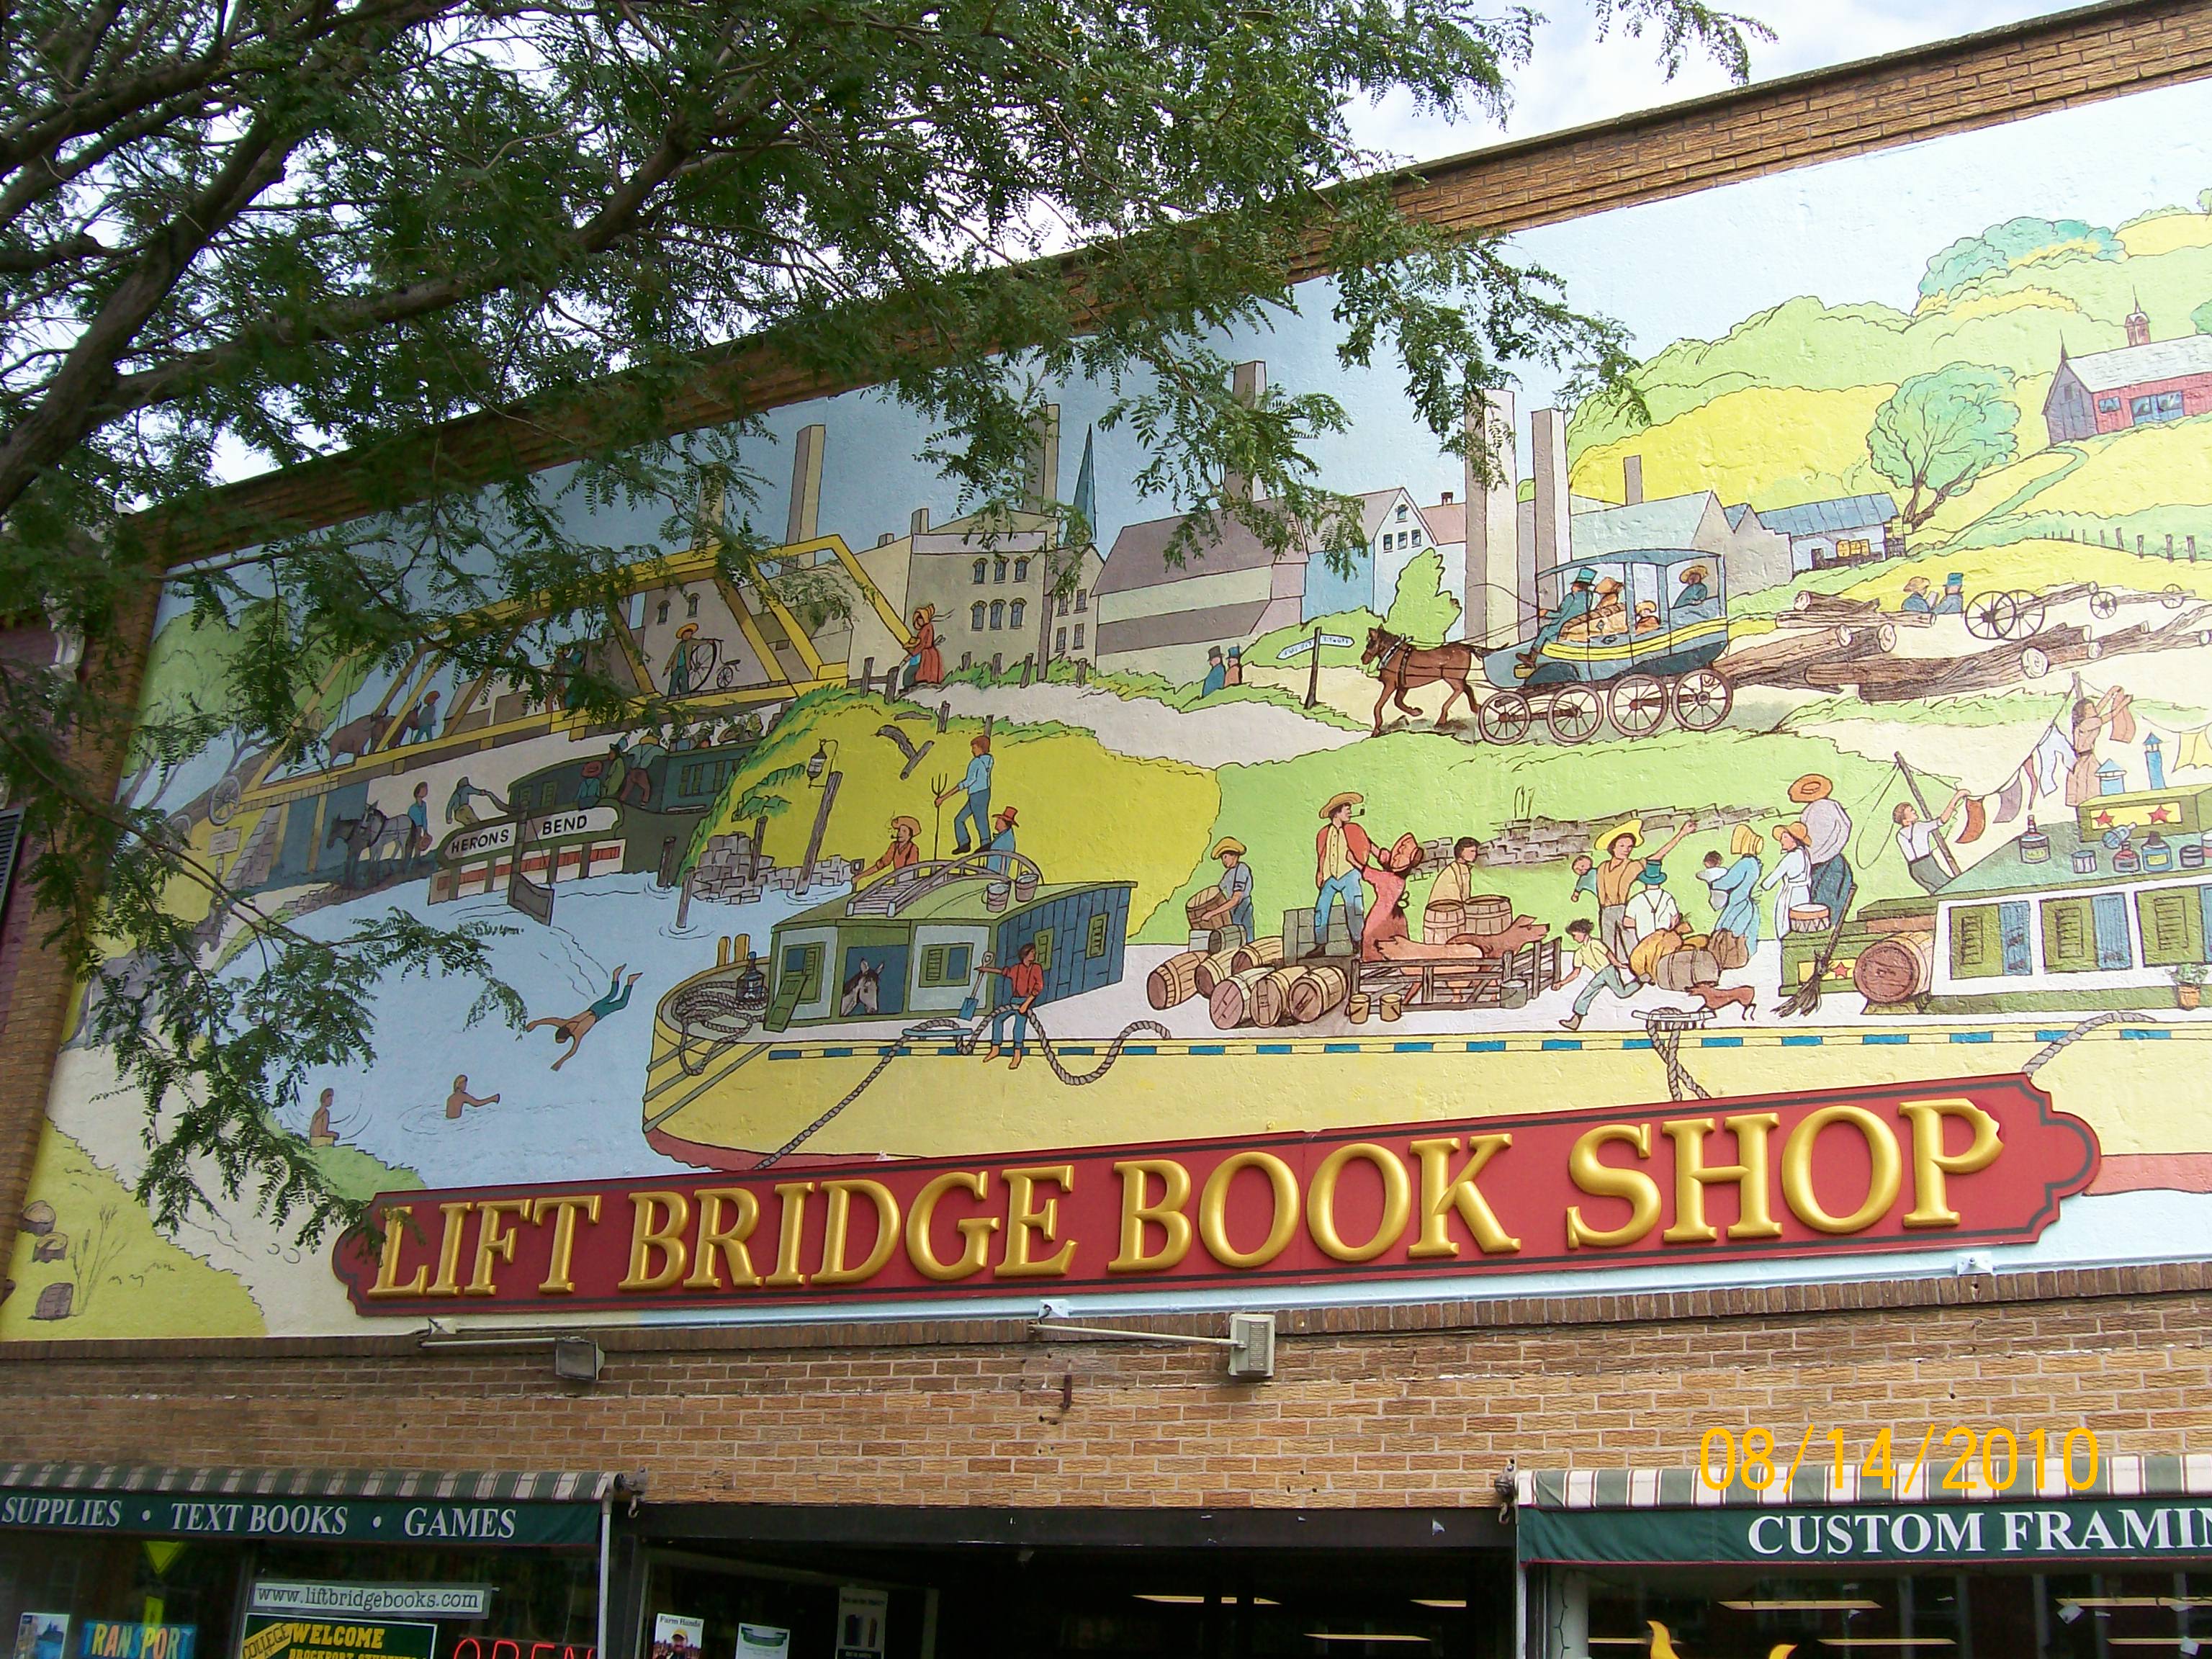 Lift Bridge Book Shop Mural.jpg